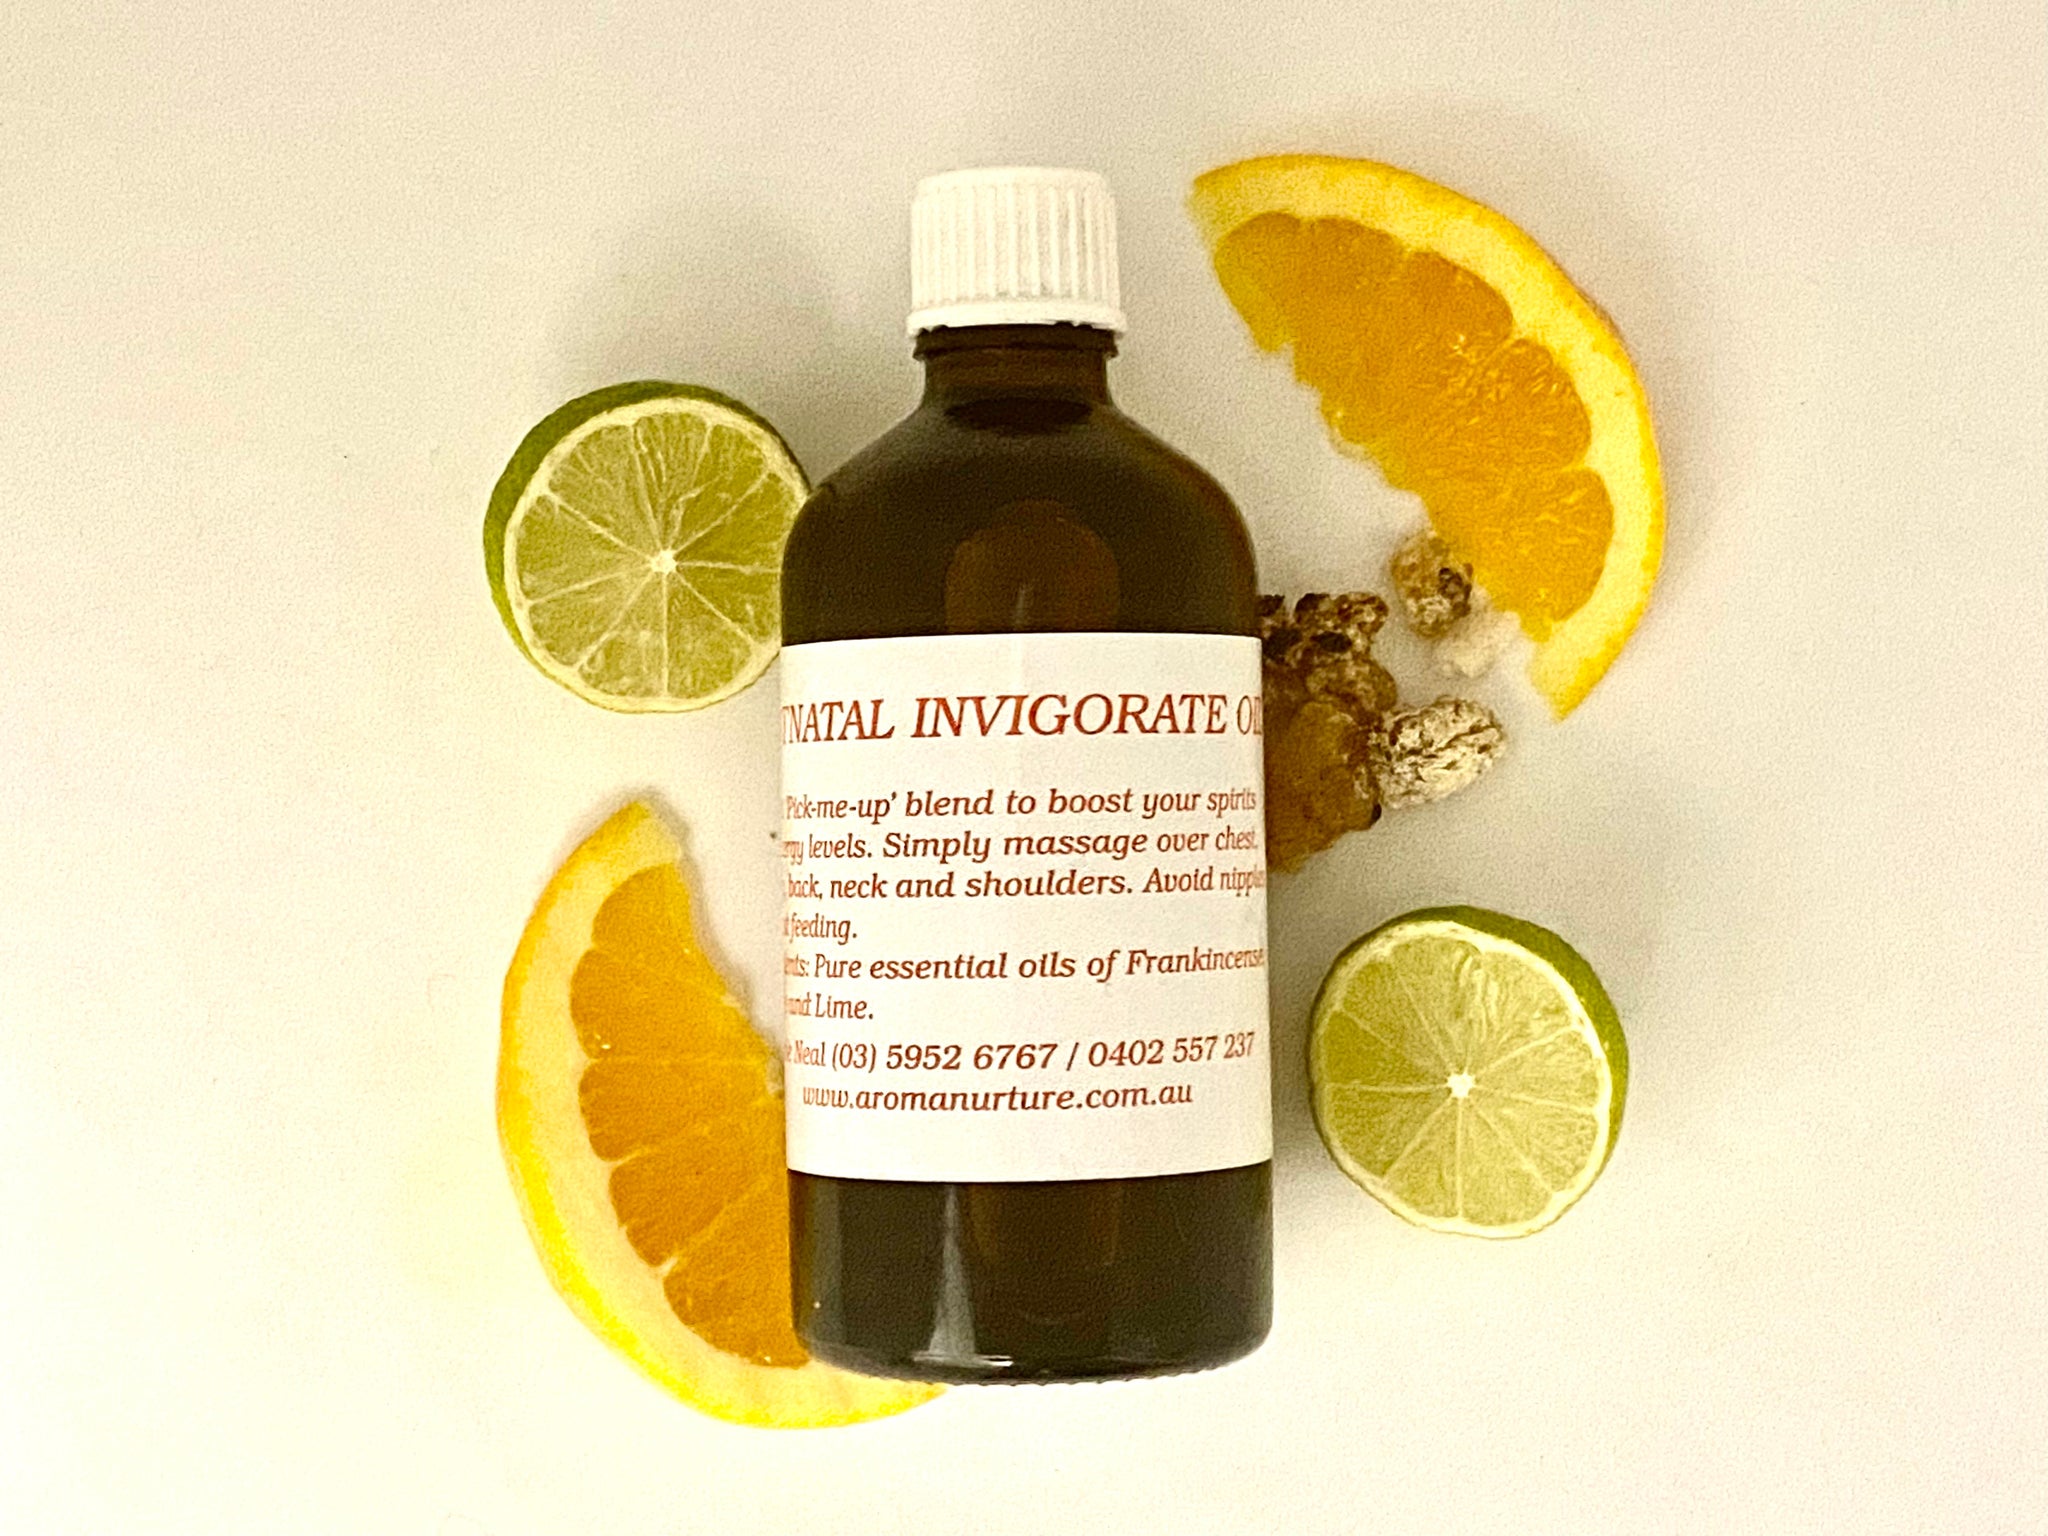 Postnatal Invigorate Massage Oil in Sweet Almond Oil. 100 mls.